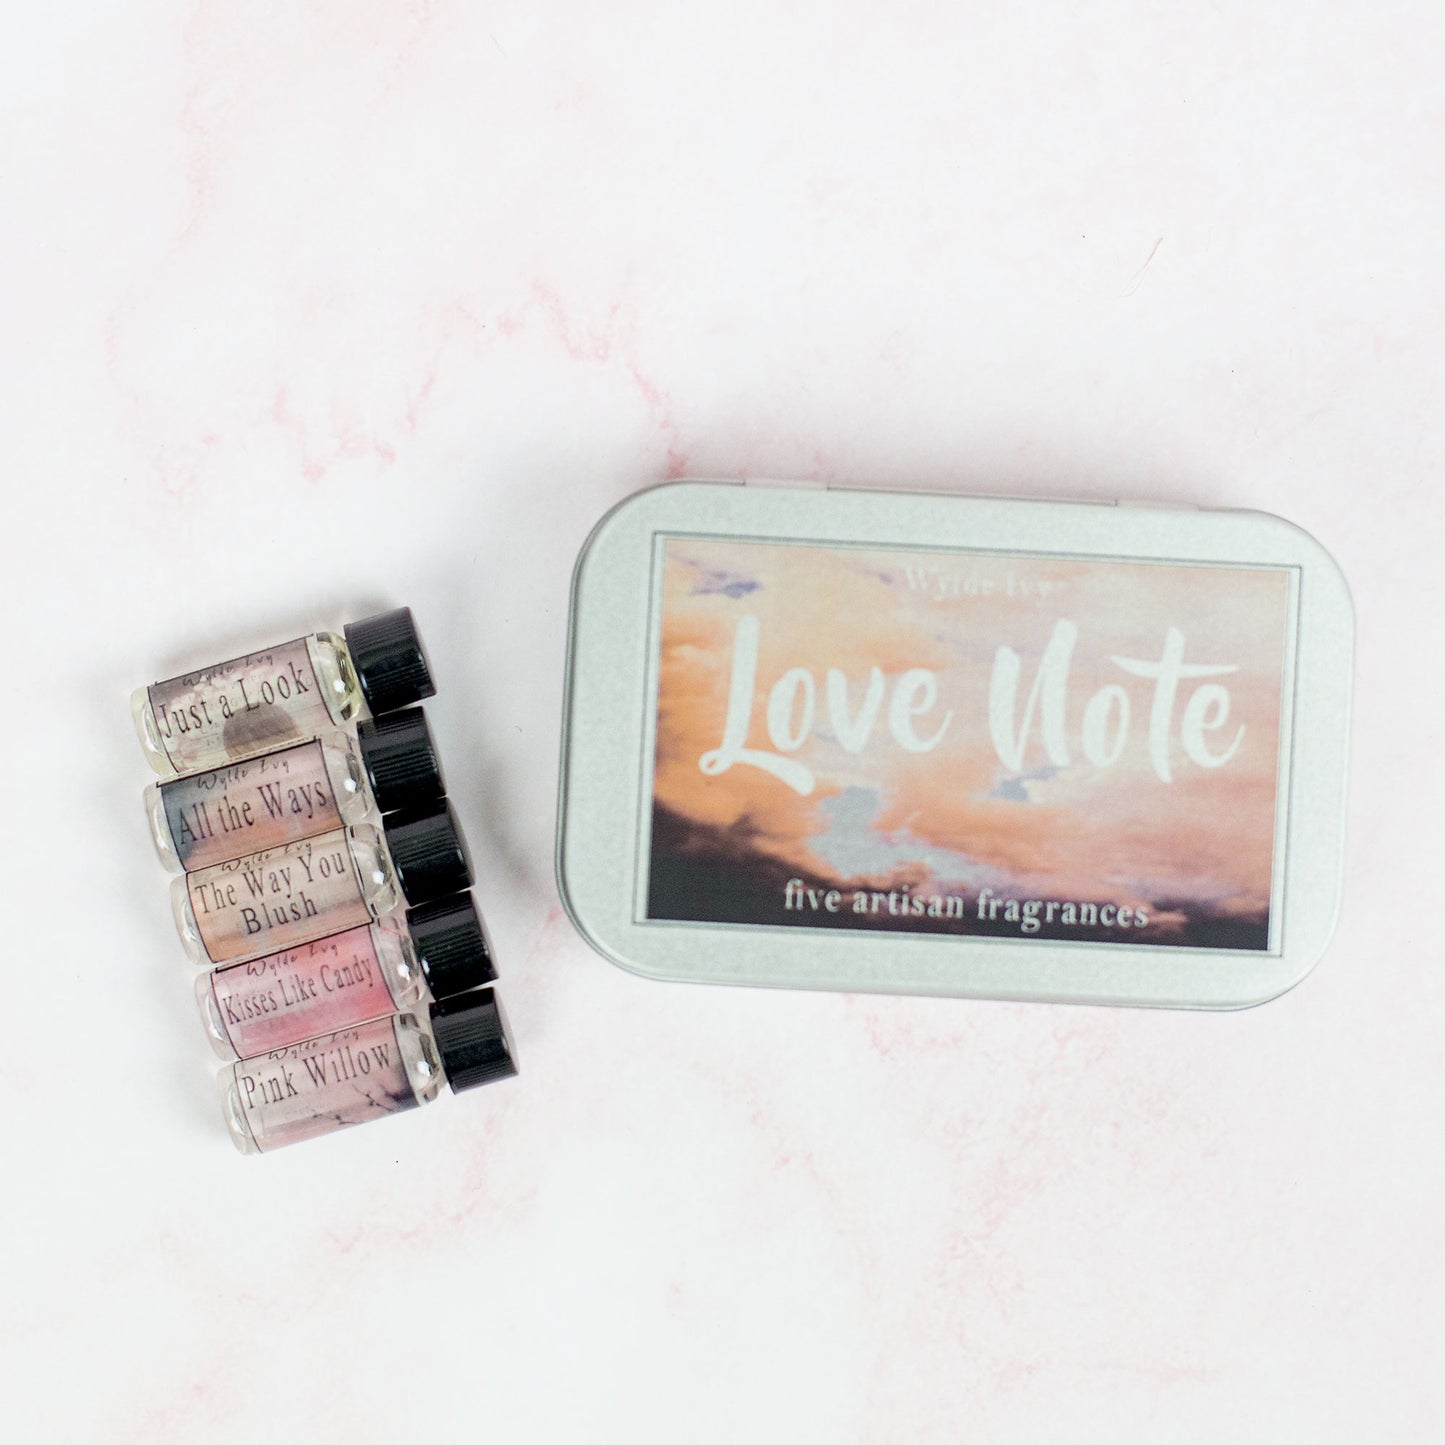 Love Note Perfume Oil Sample Set